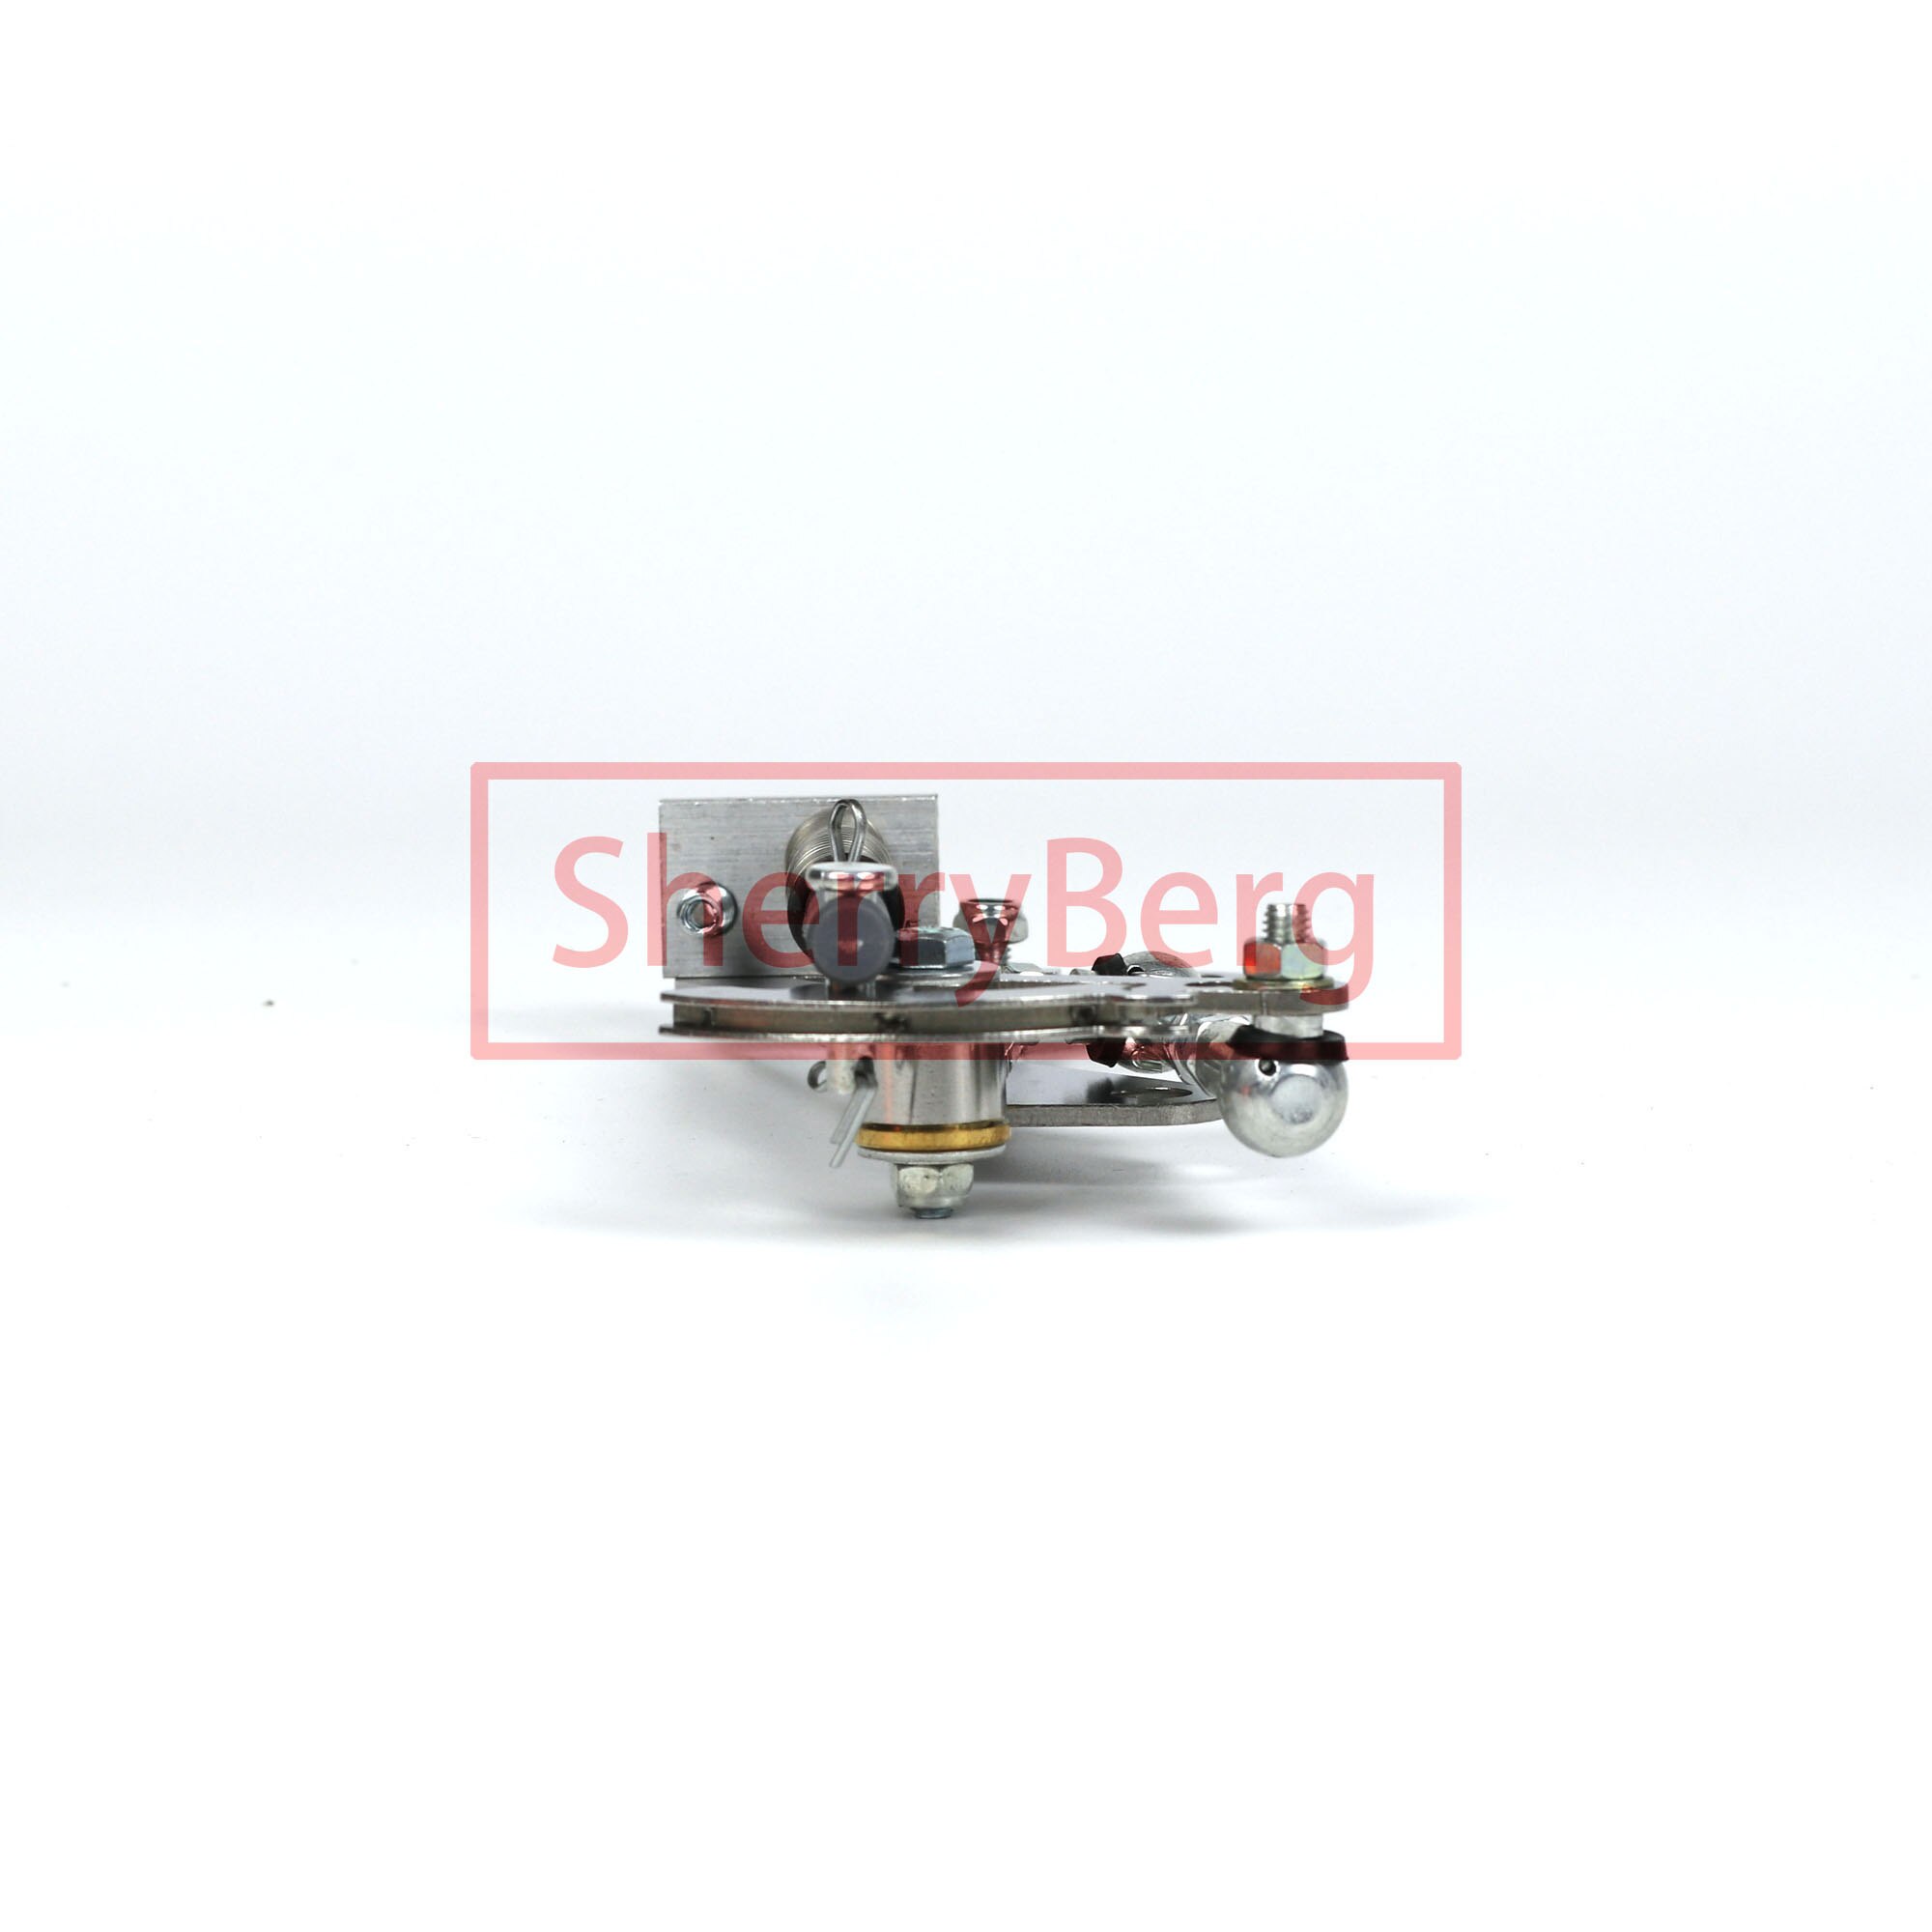 Sherryberg throttle linkage kit injektionskrop - weber 40/45/48/50/55 dcoe / dellorto / jenvey dellorto 40/45 dhla addhe